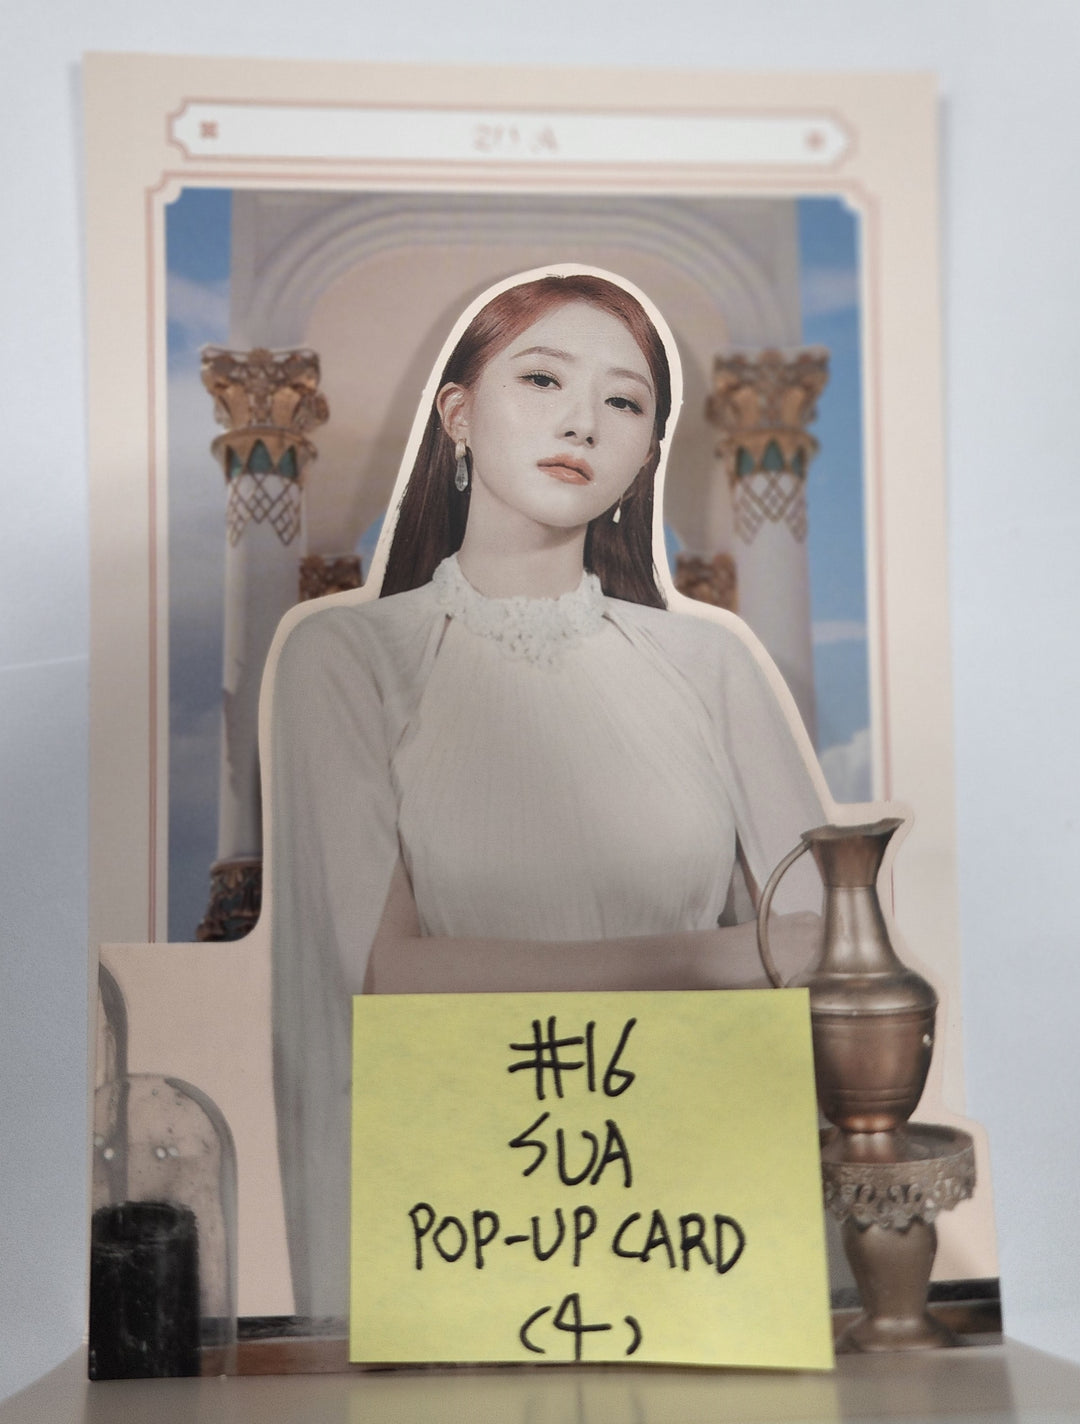 Dreamcatcher 'Apocalypse : Save us' - Limited Edition Official Photocard, Pop-Up Card, Hologram Postcard [S Ver]